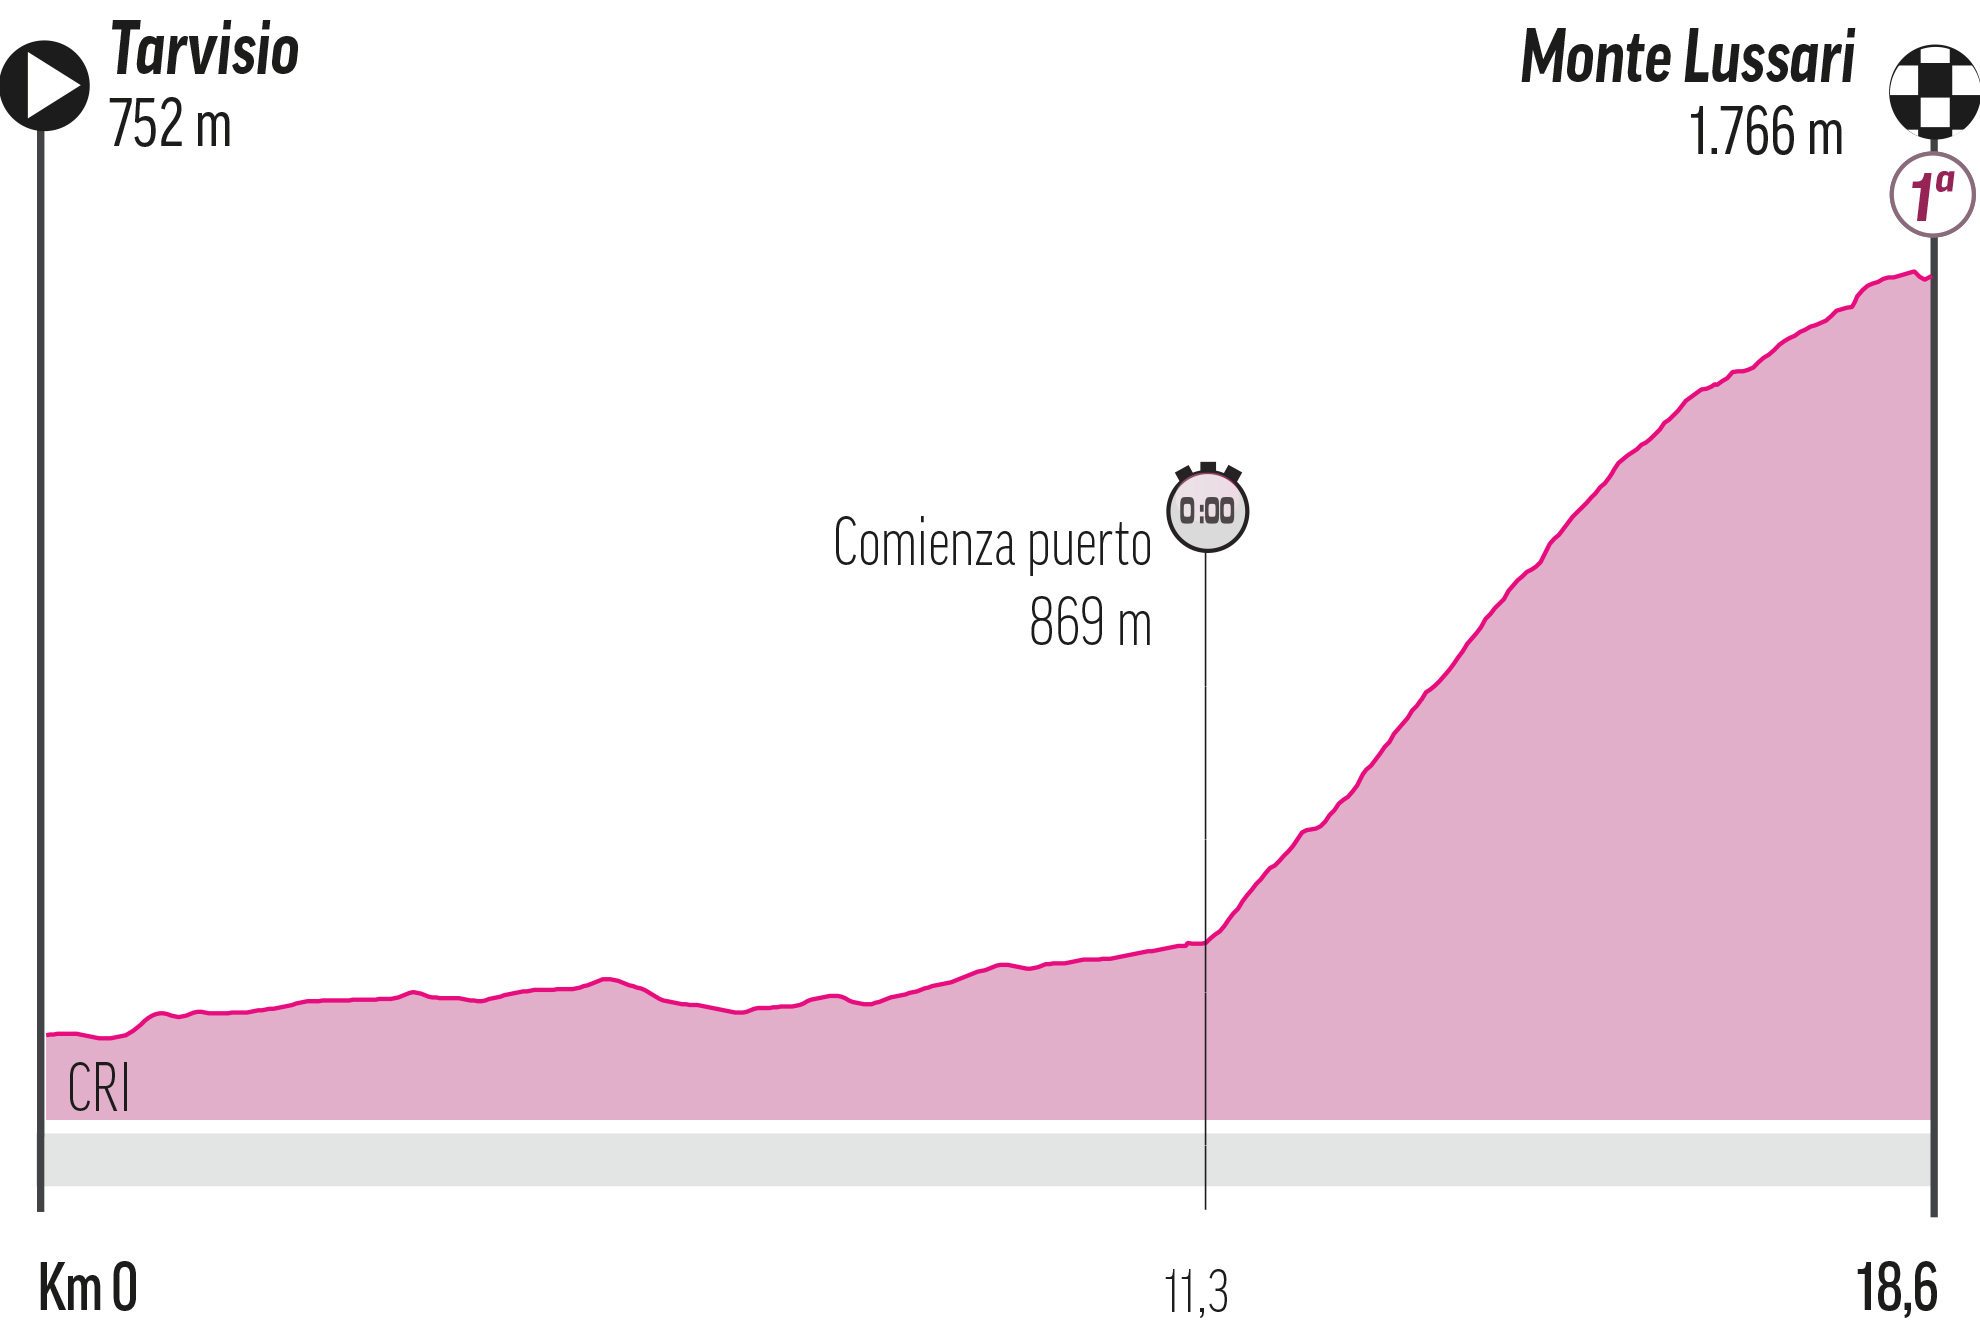 Giro de Italia etapa 20 en directo: Tarvisio - Monte Lussari